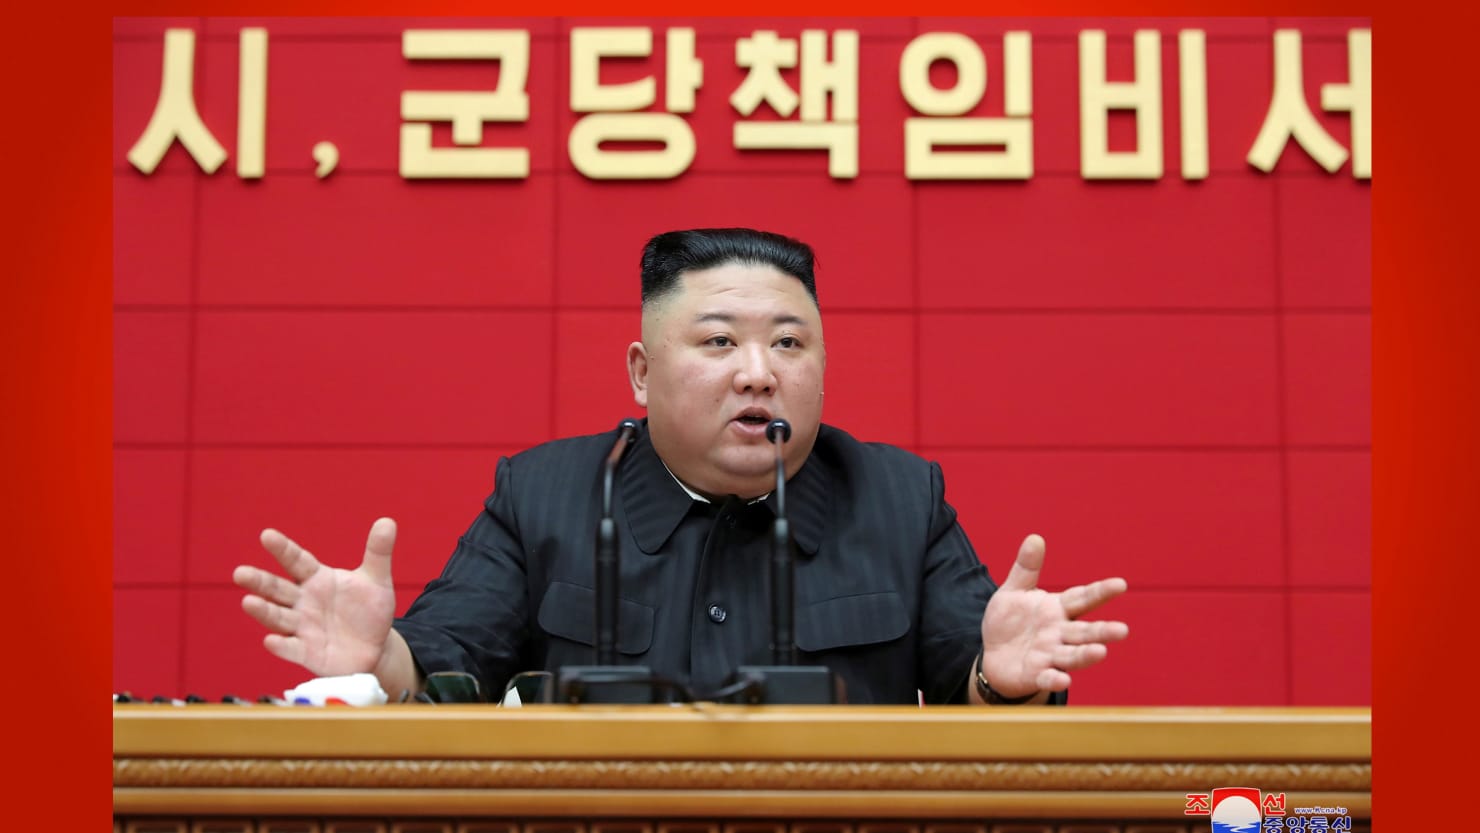 North Korea’s leader Kim Jong Un does not respond to Biden’s calls